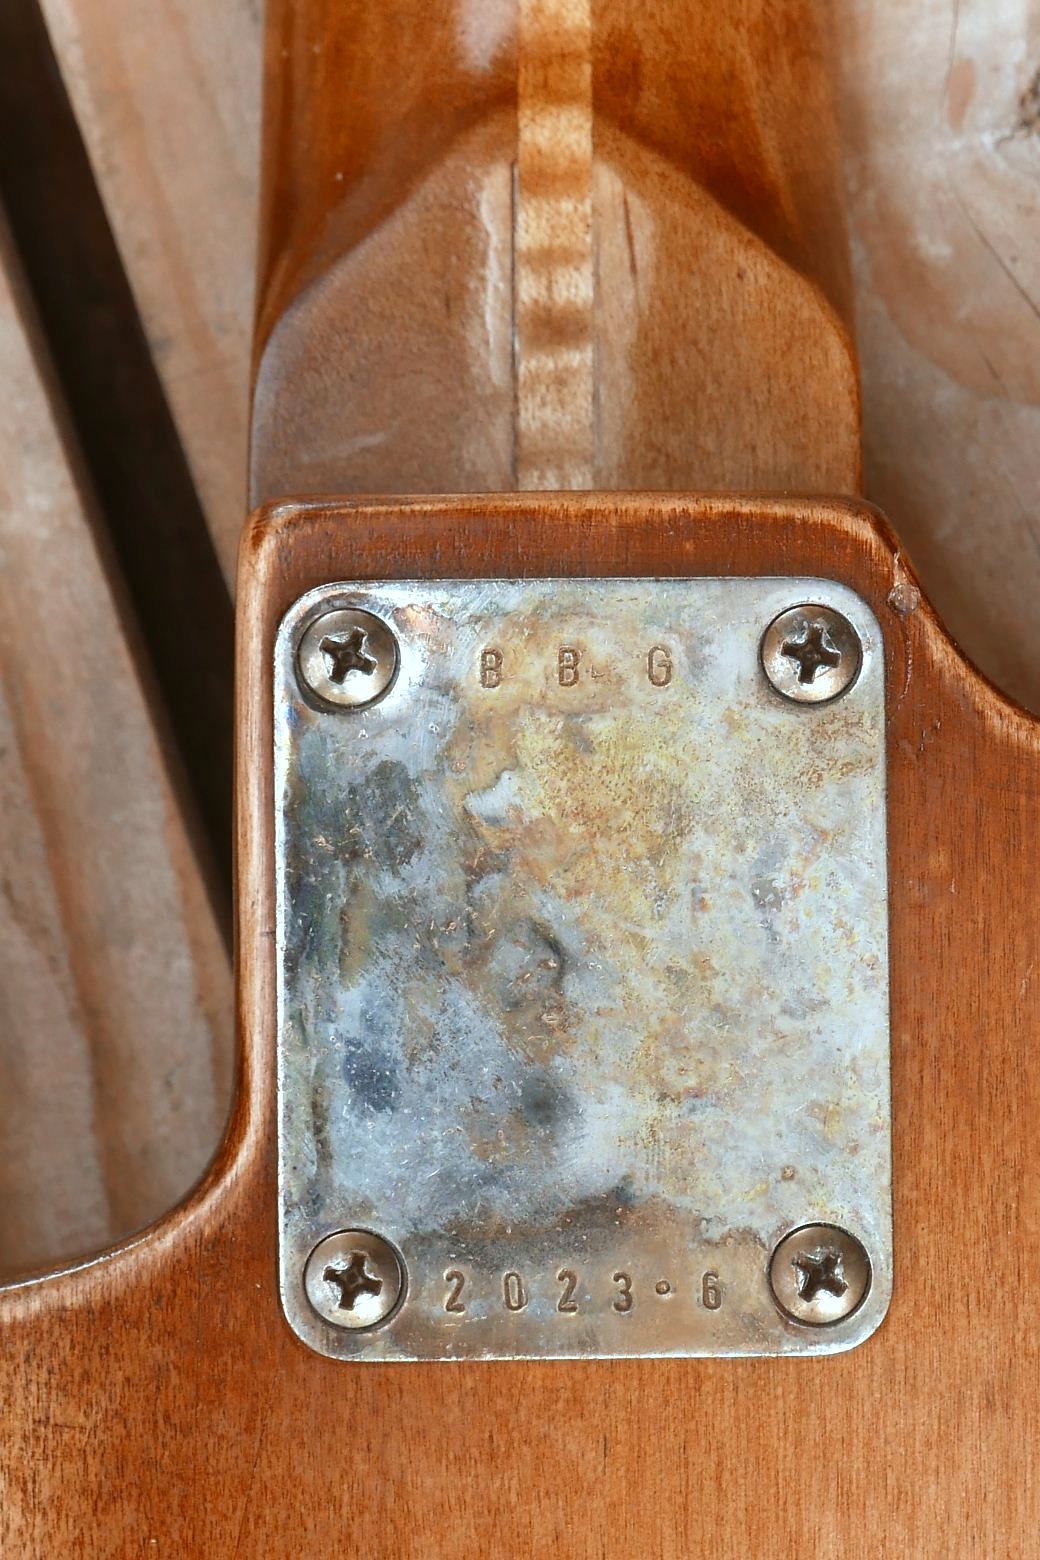 neckplate serial number